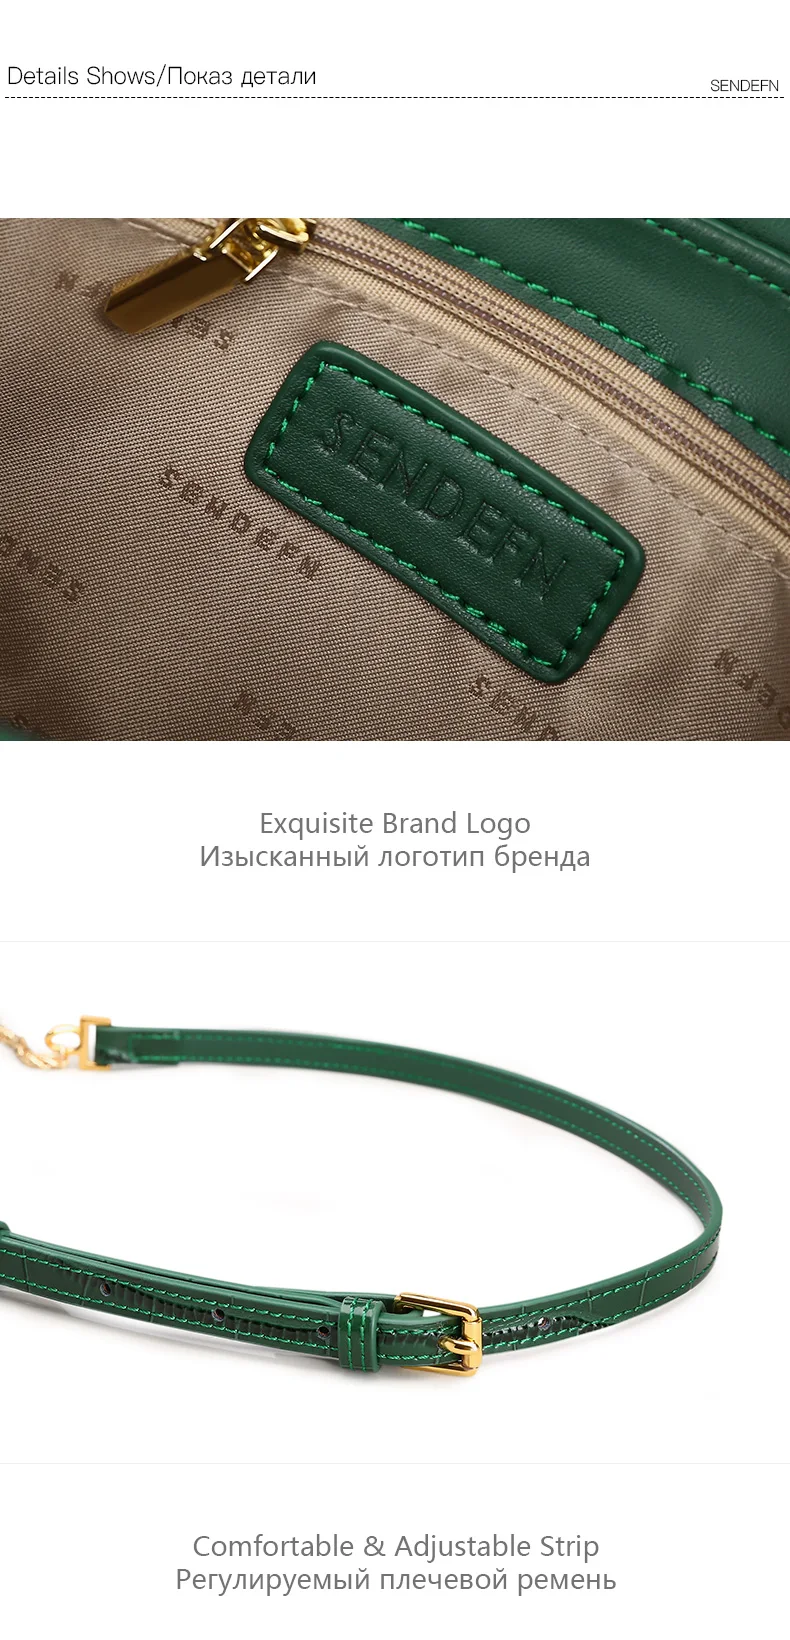 Sendefn Crocodile Pattern Crossbody Bag Split Leather  Female  Brand Handbag Quality Women Messenger